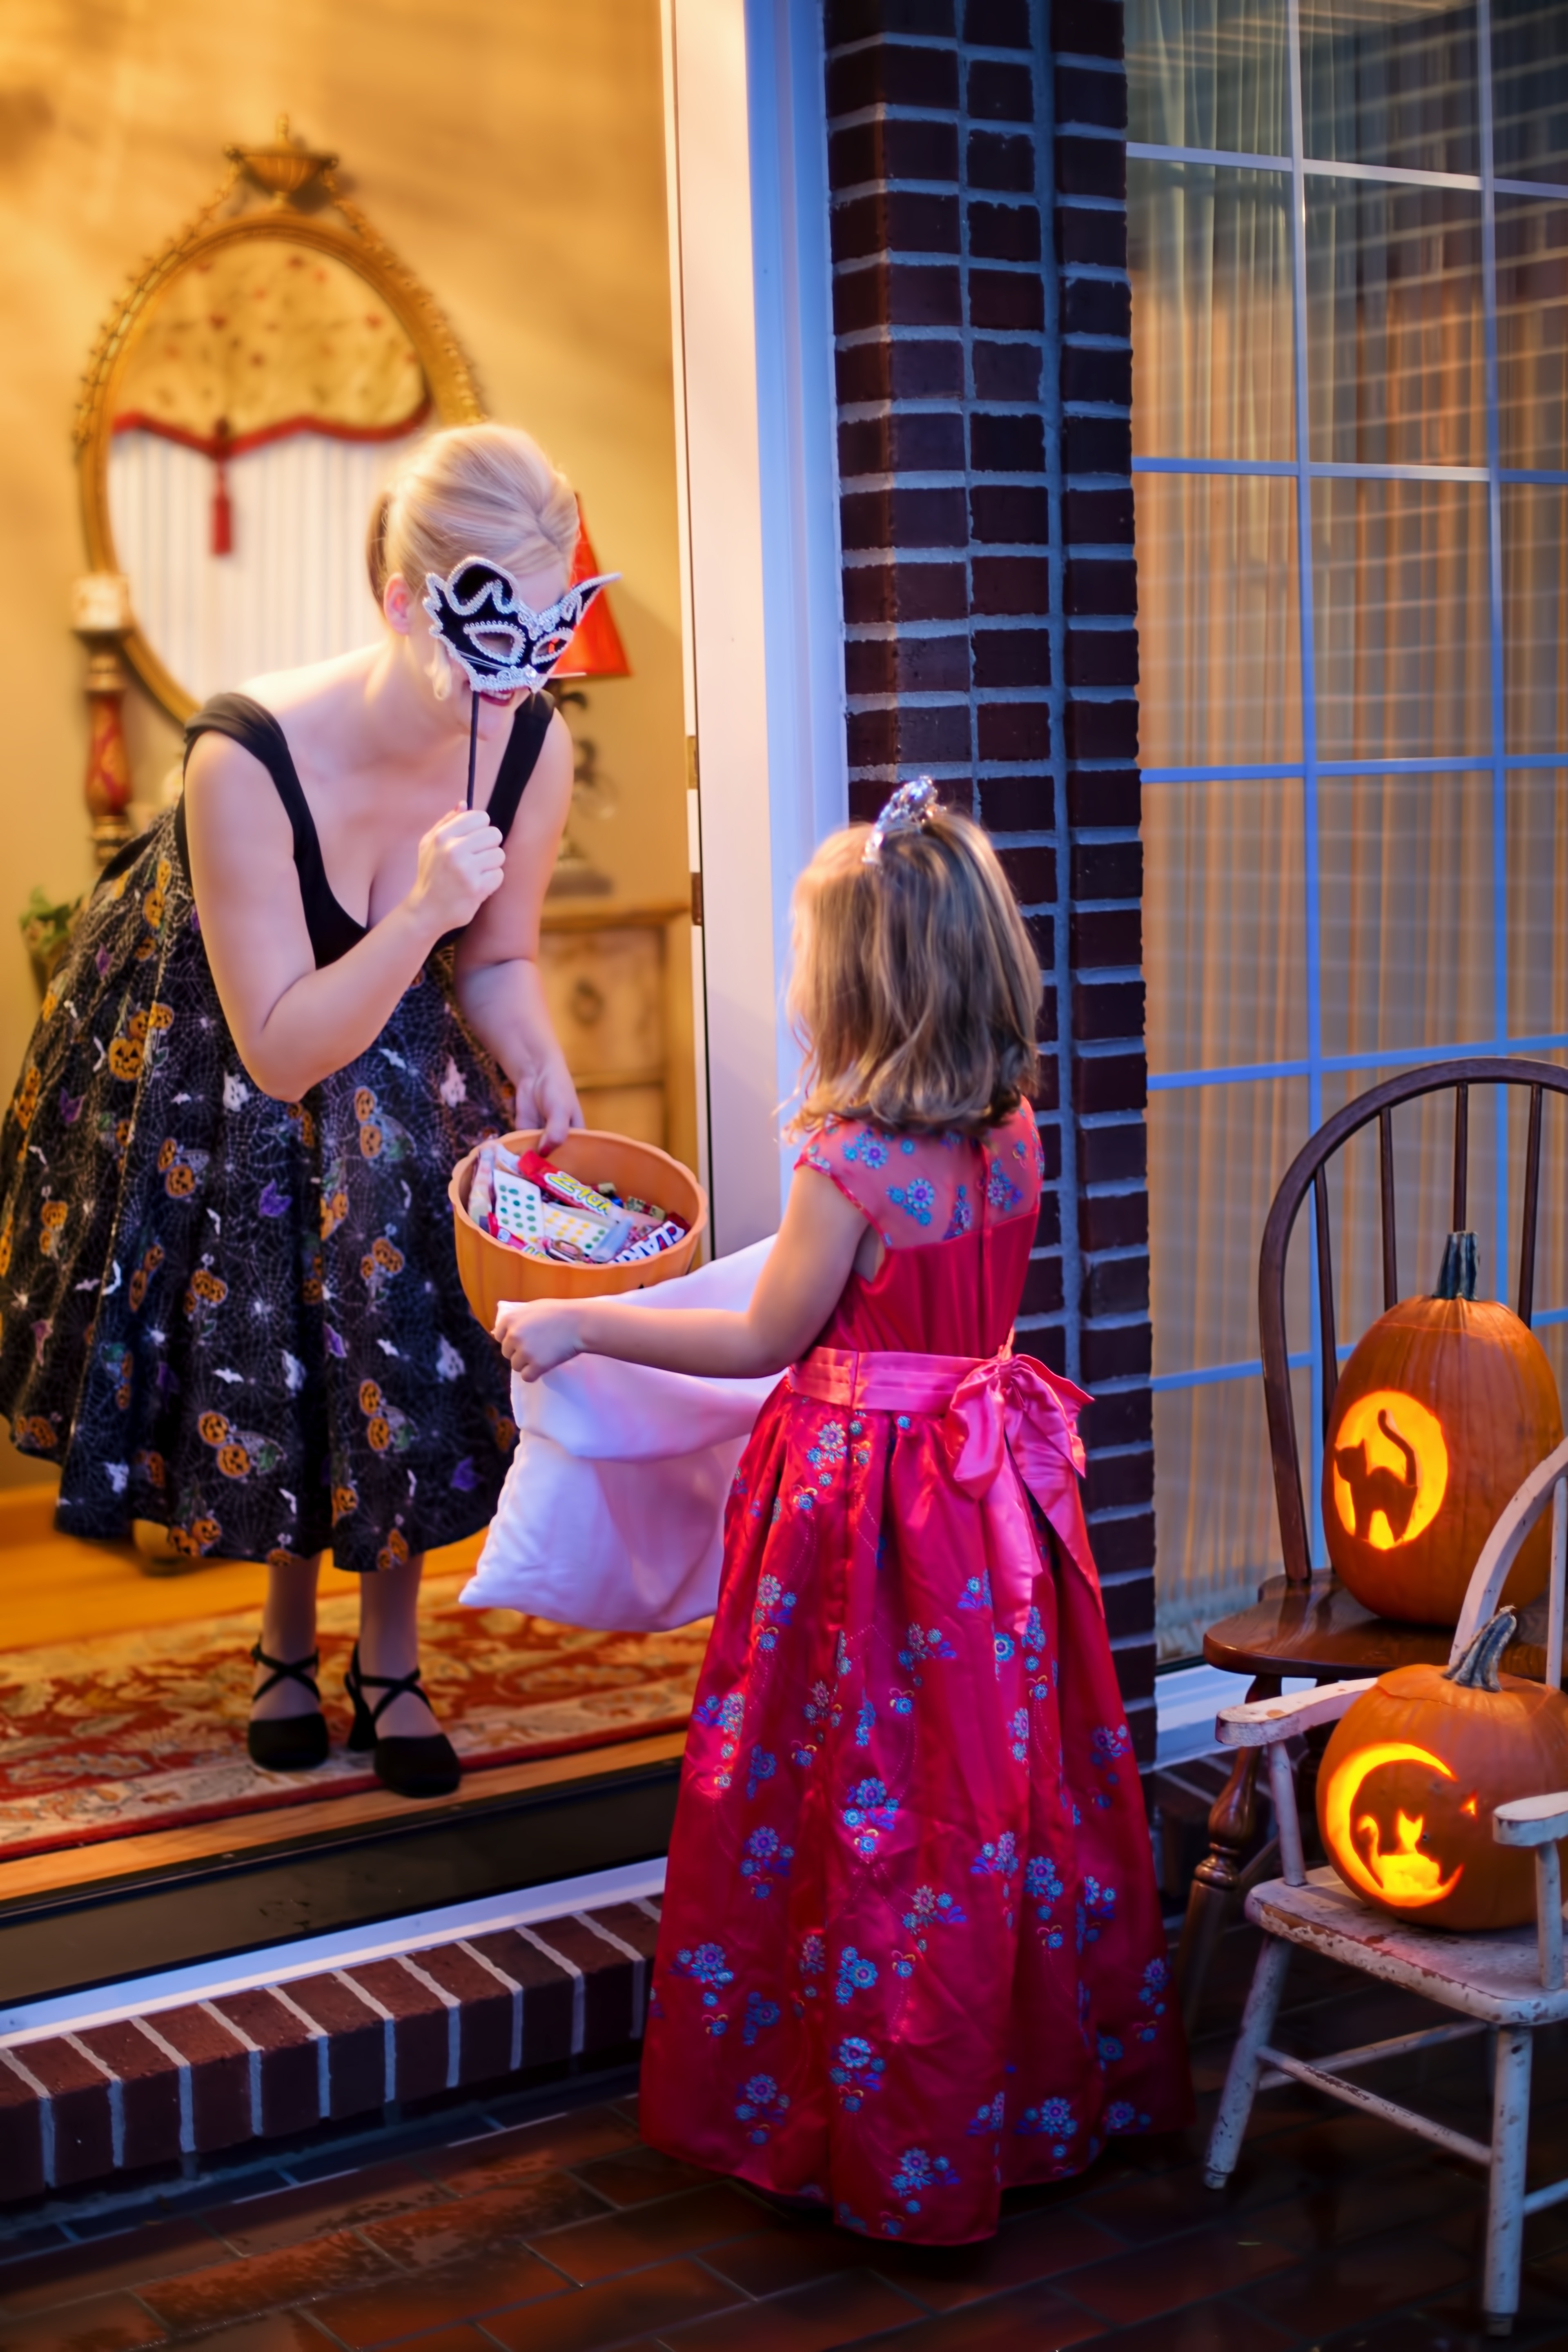 Halloween Photo by Jill Wellington from Pexels